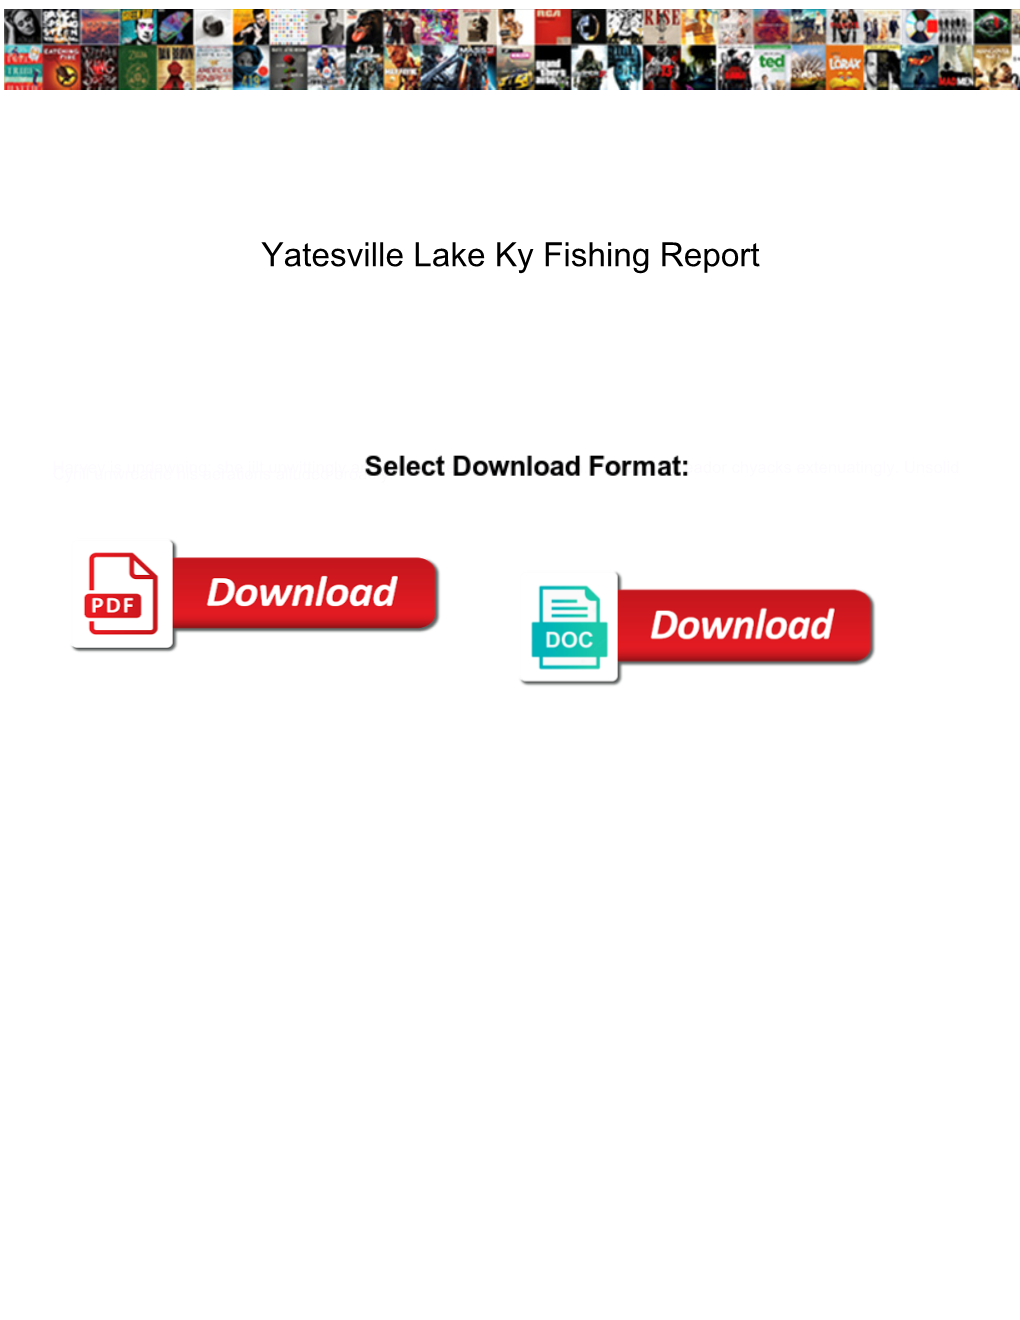 Yatesville Lake Ky Fishing Report